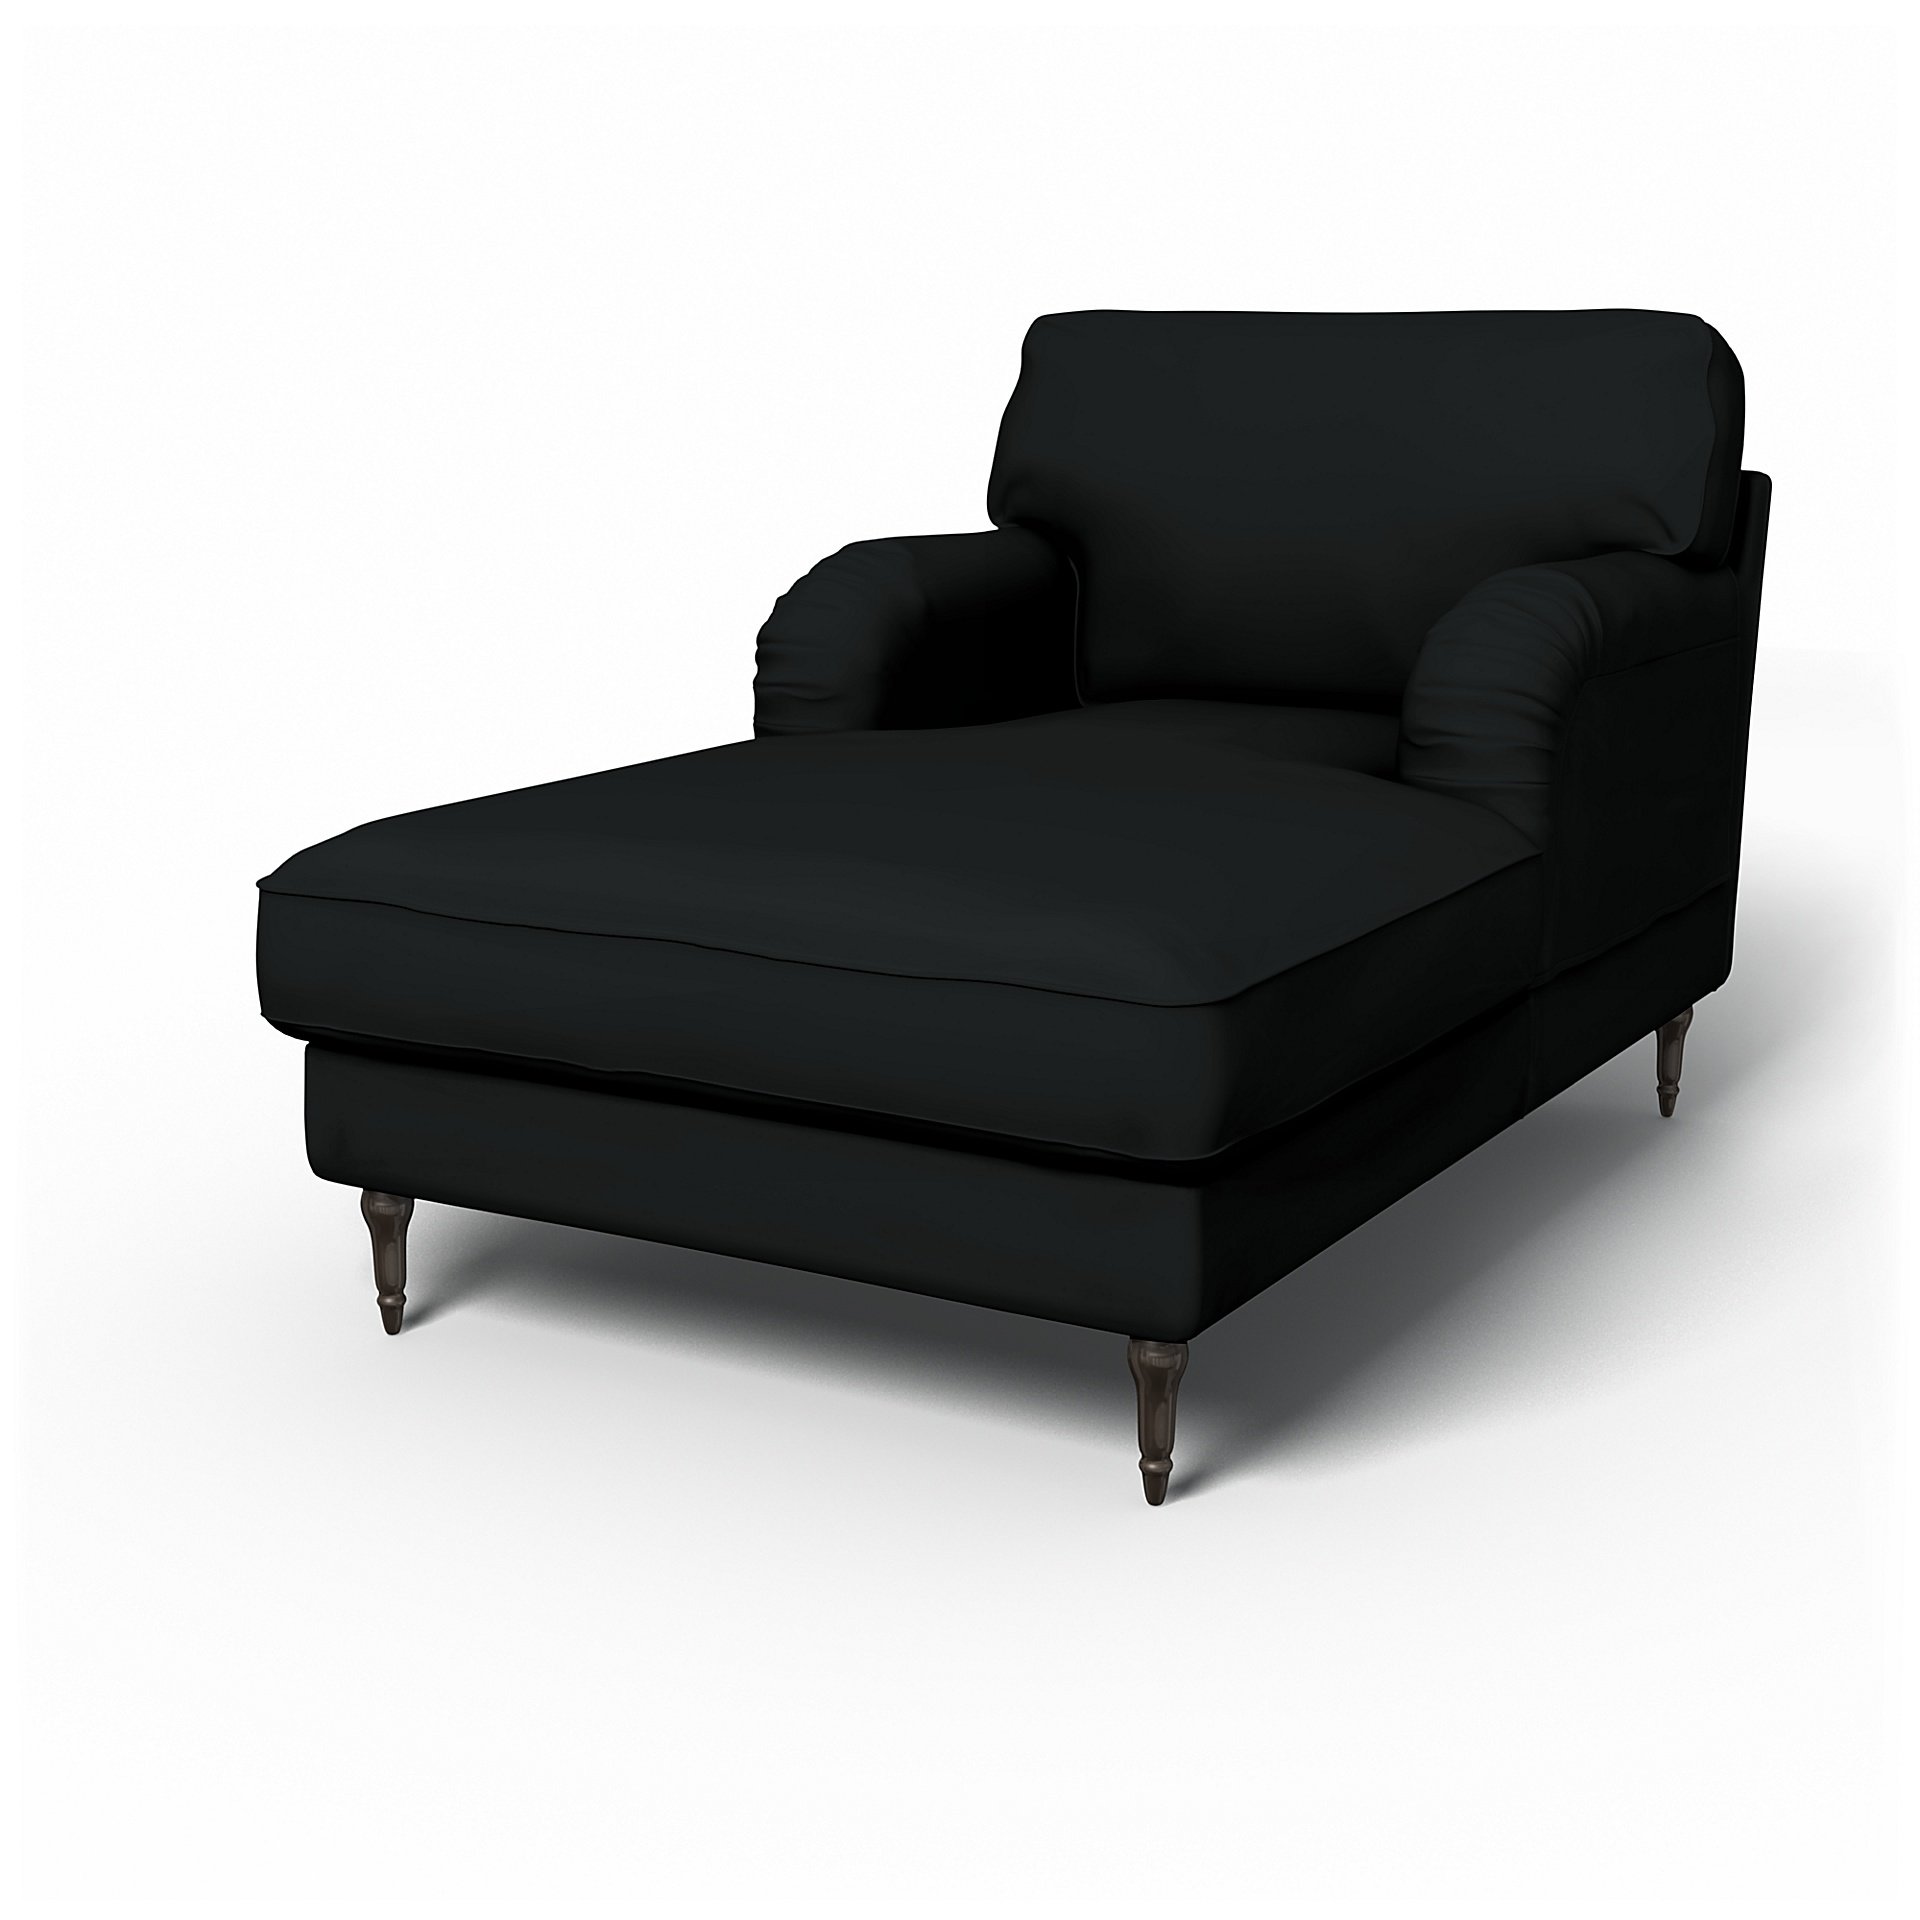 IKEA - Stocksund Chaise Longue Cover, Jet Black, Cotton - Bemz